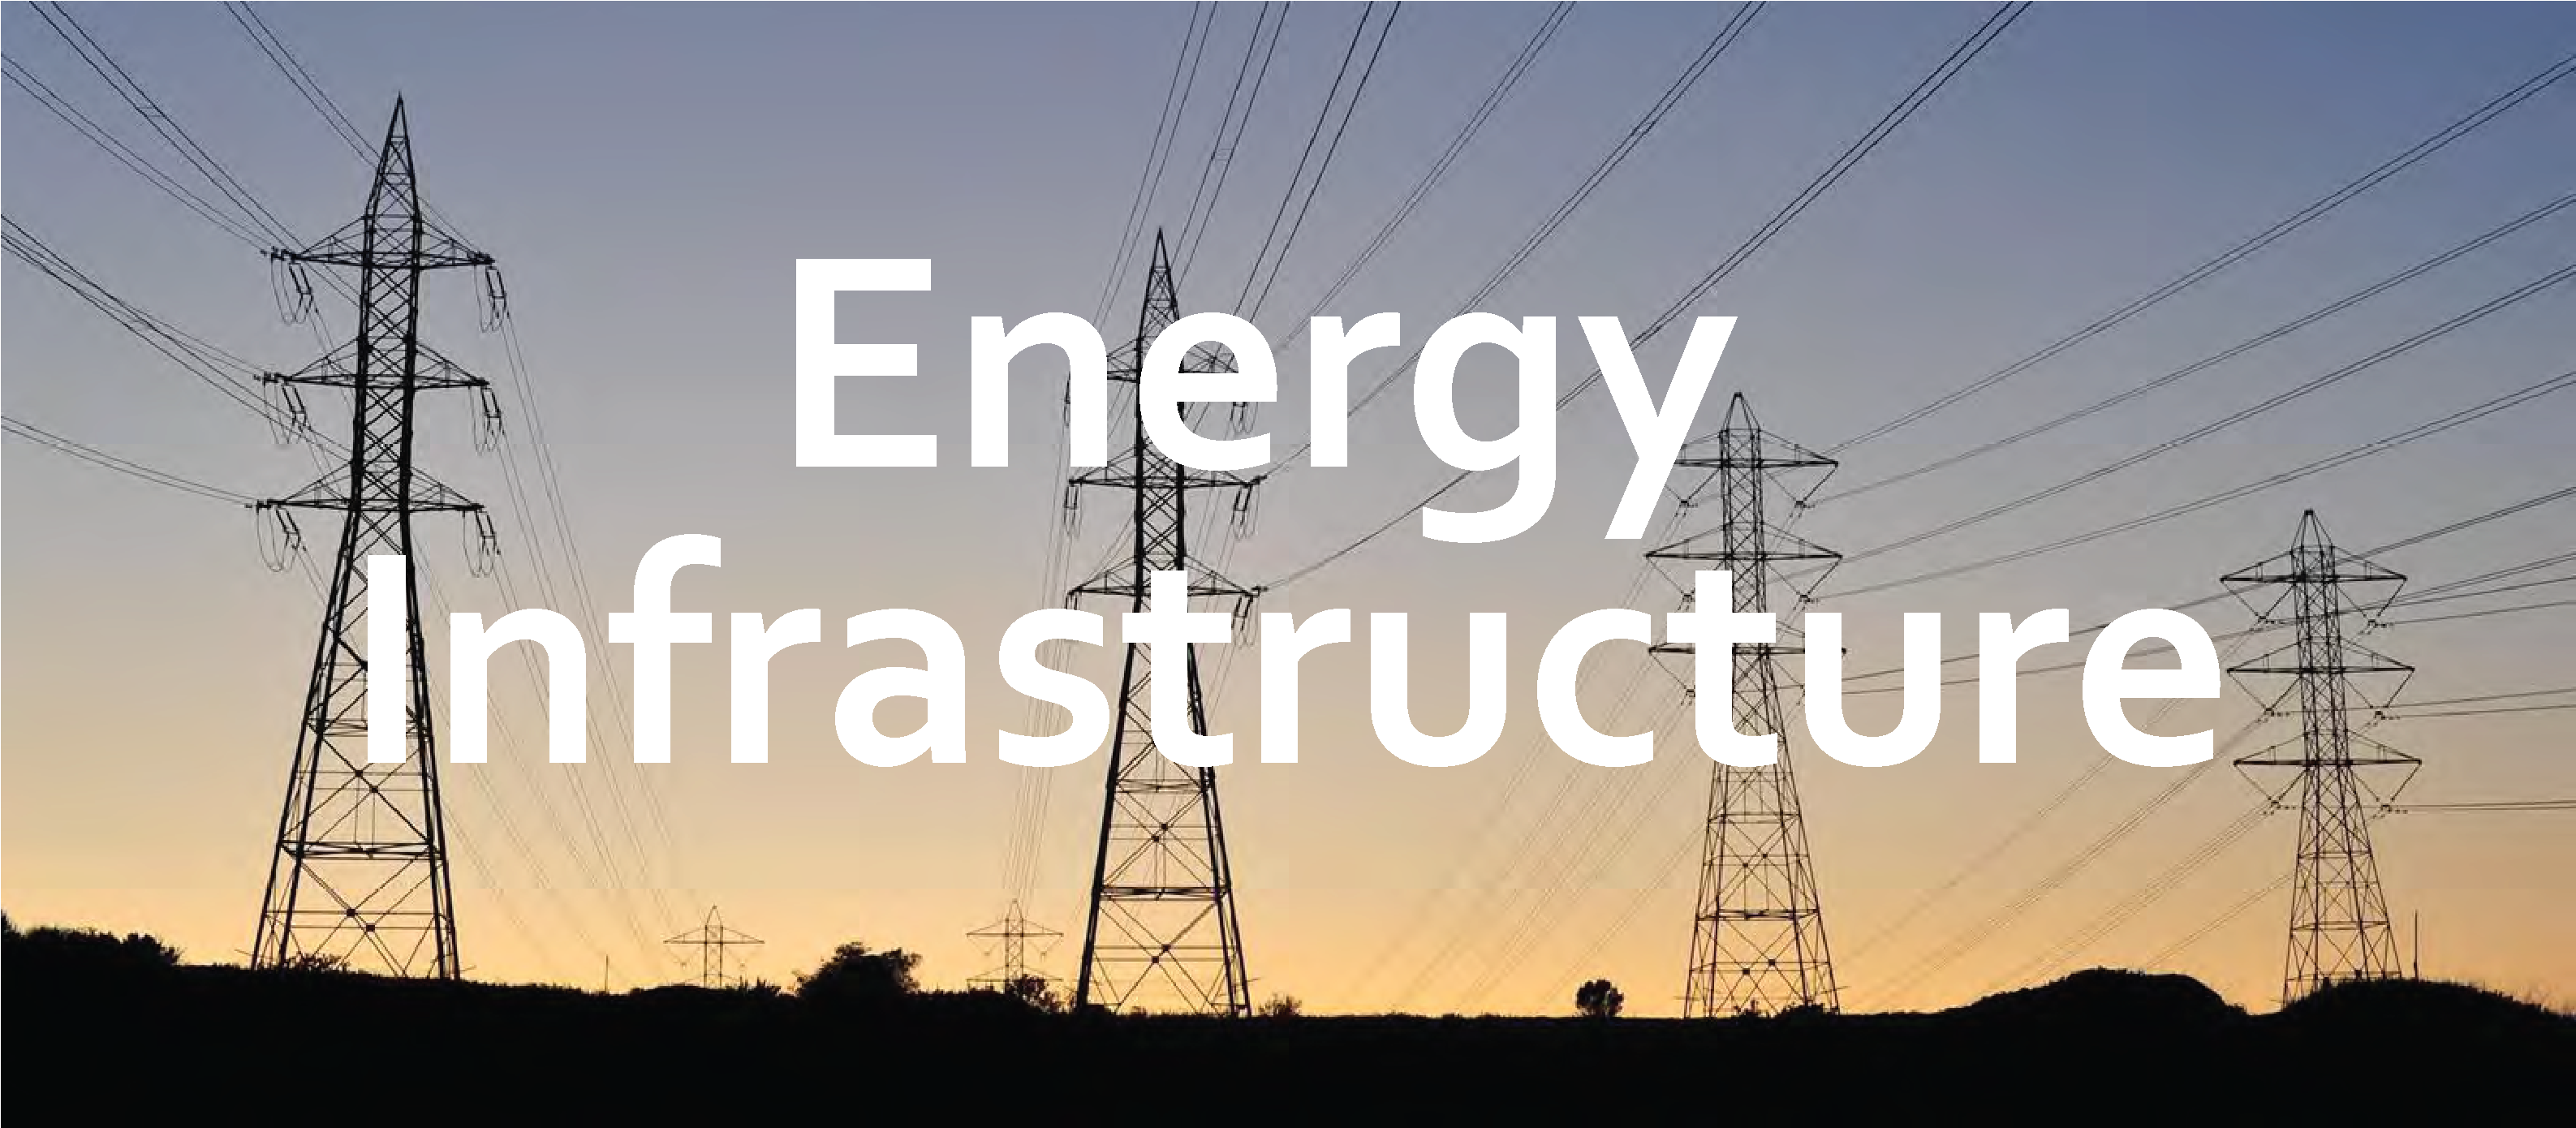 Energy Infrastructure